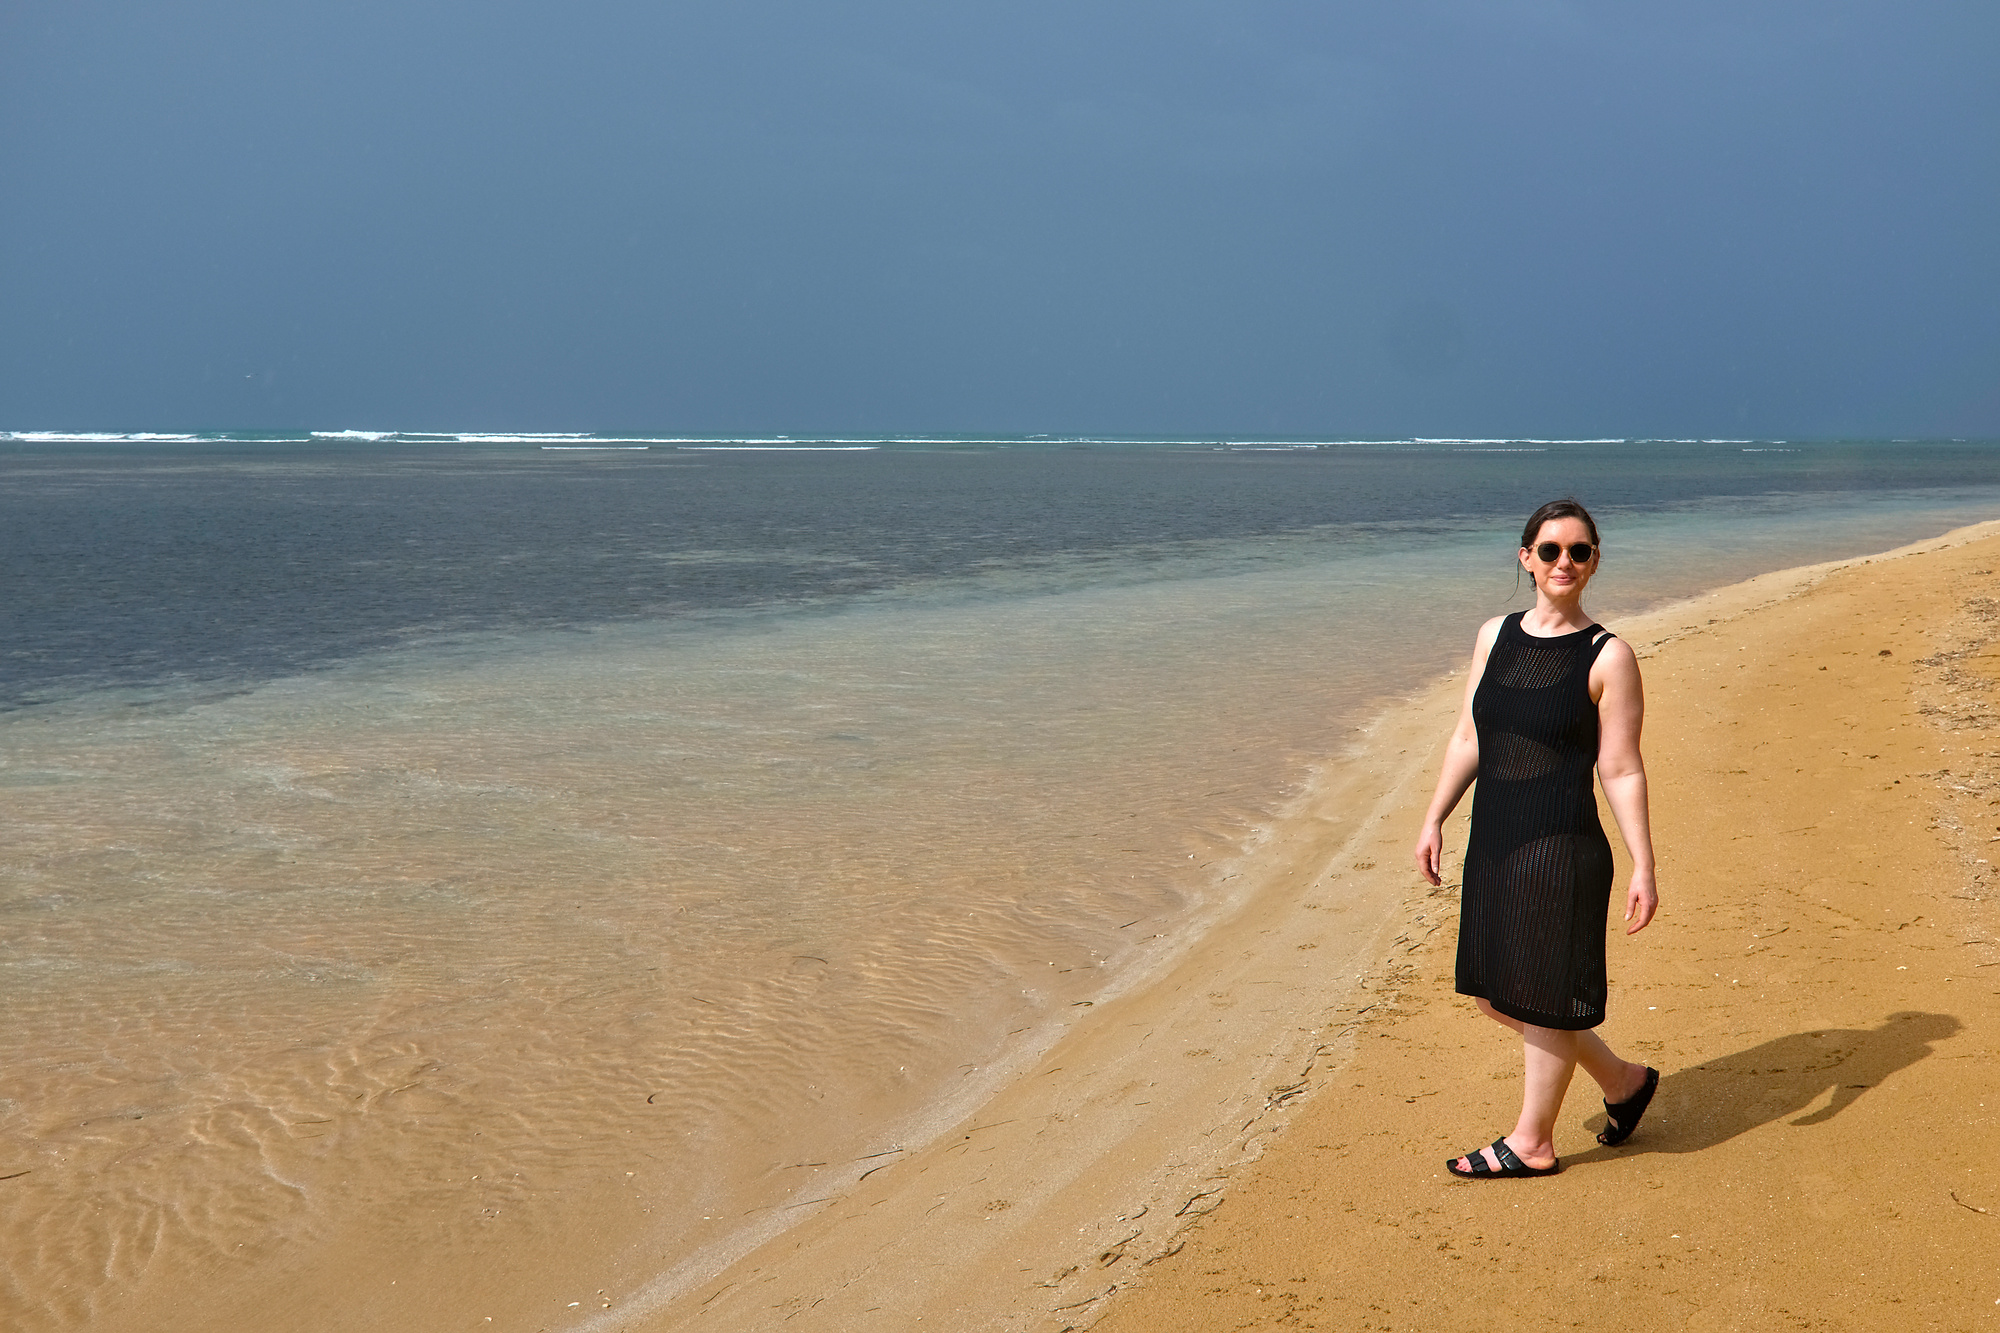 Alyssa walks on a beach in Puerto Rico